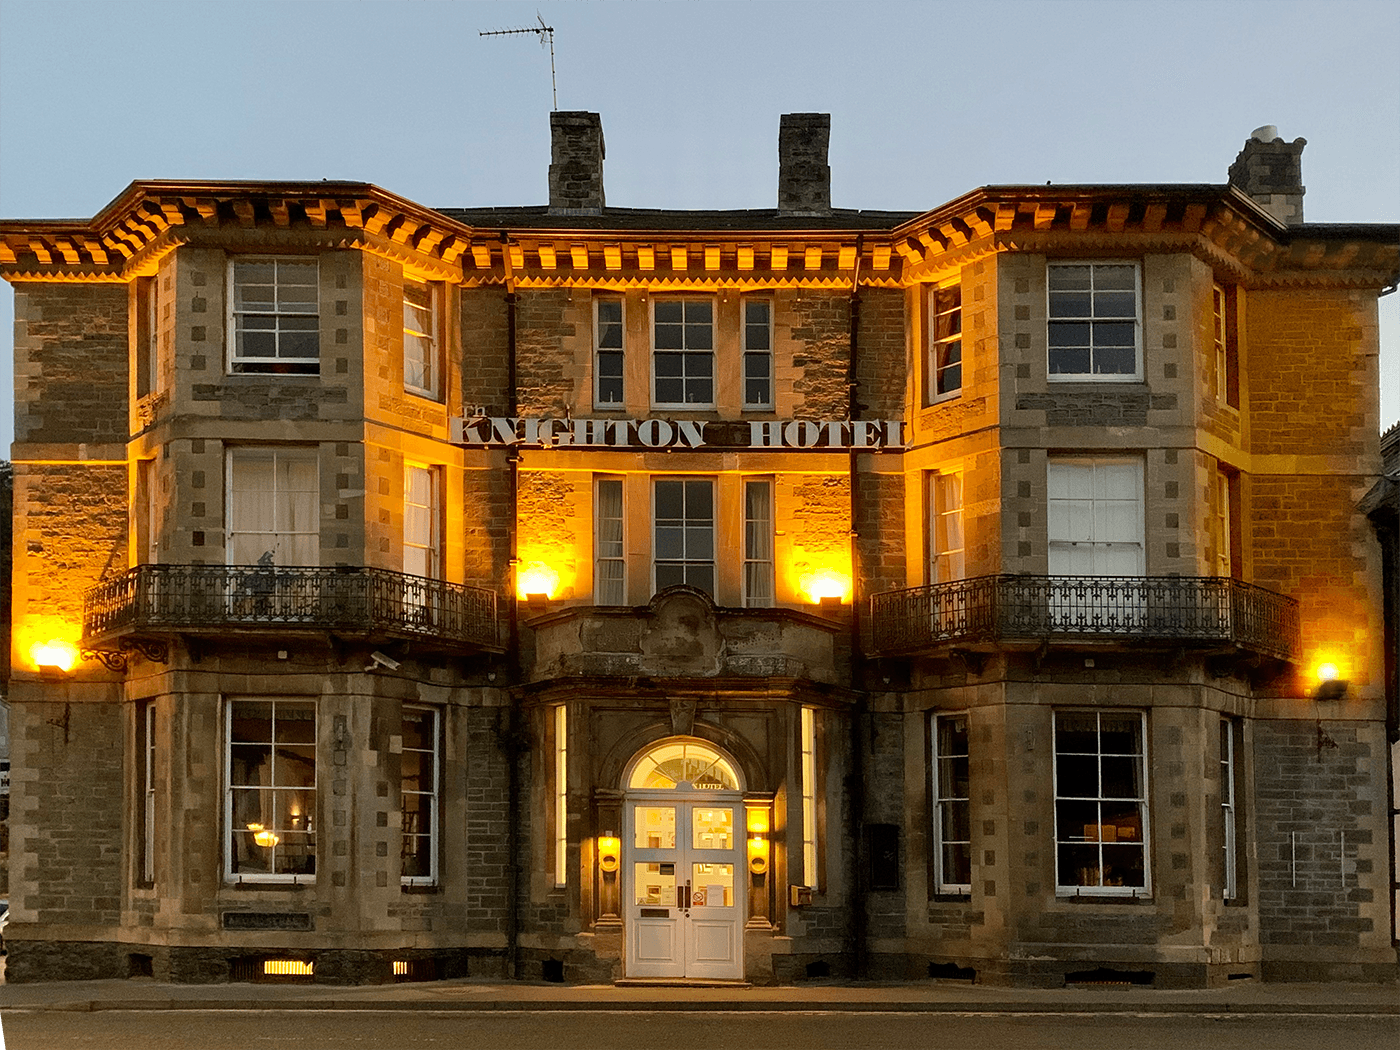 The Knighton Hotel